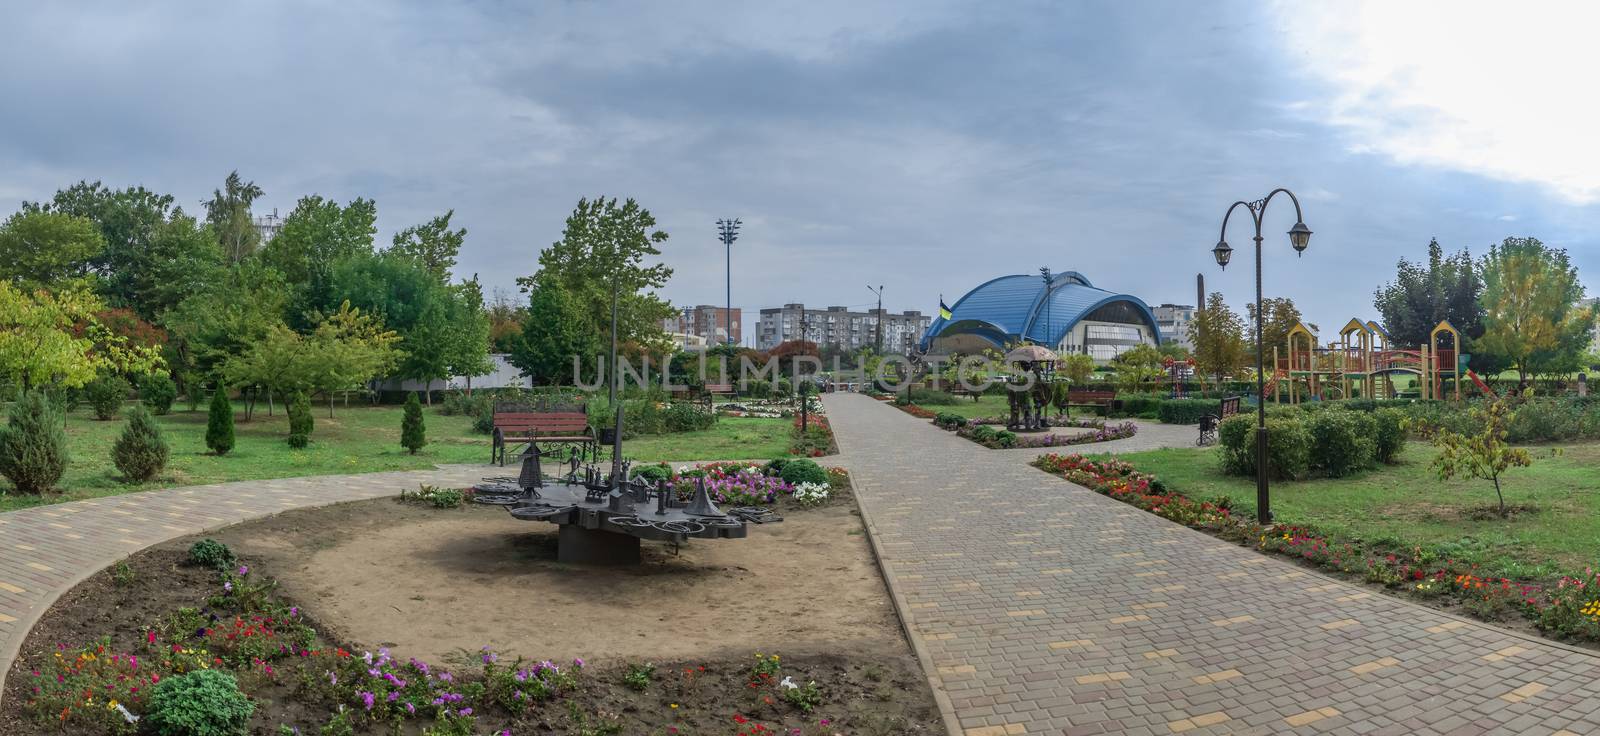 Garden of forged sculptures in Yuzhny city, Ukraine by Multipedia